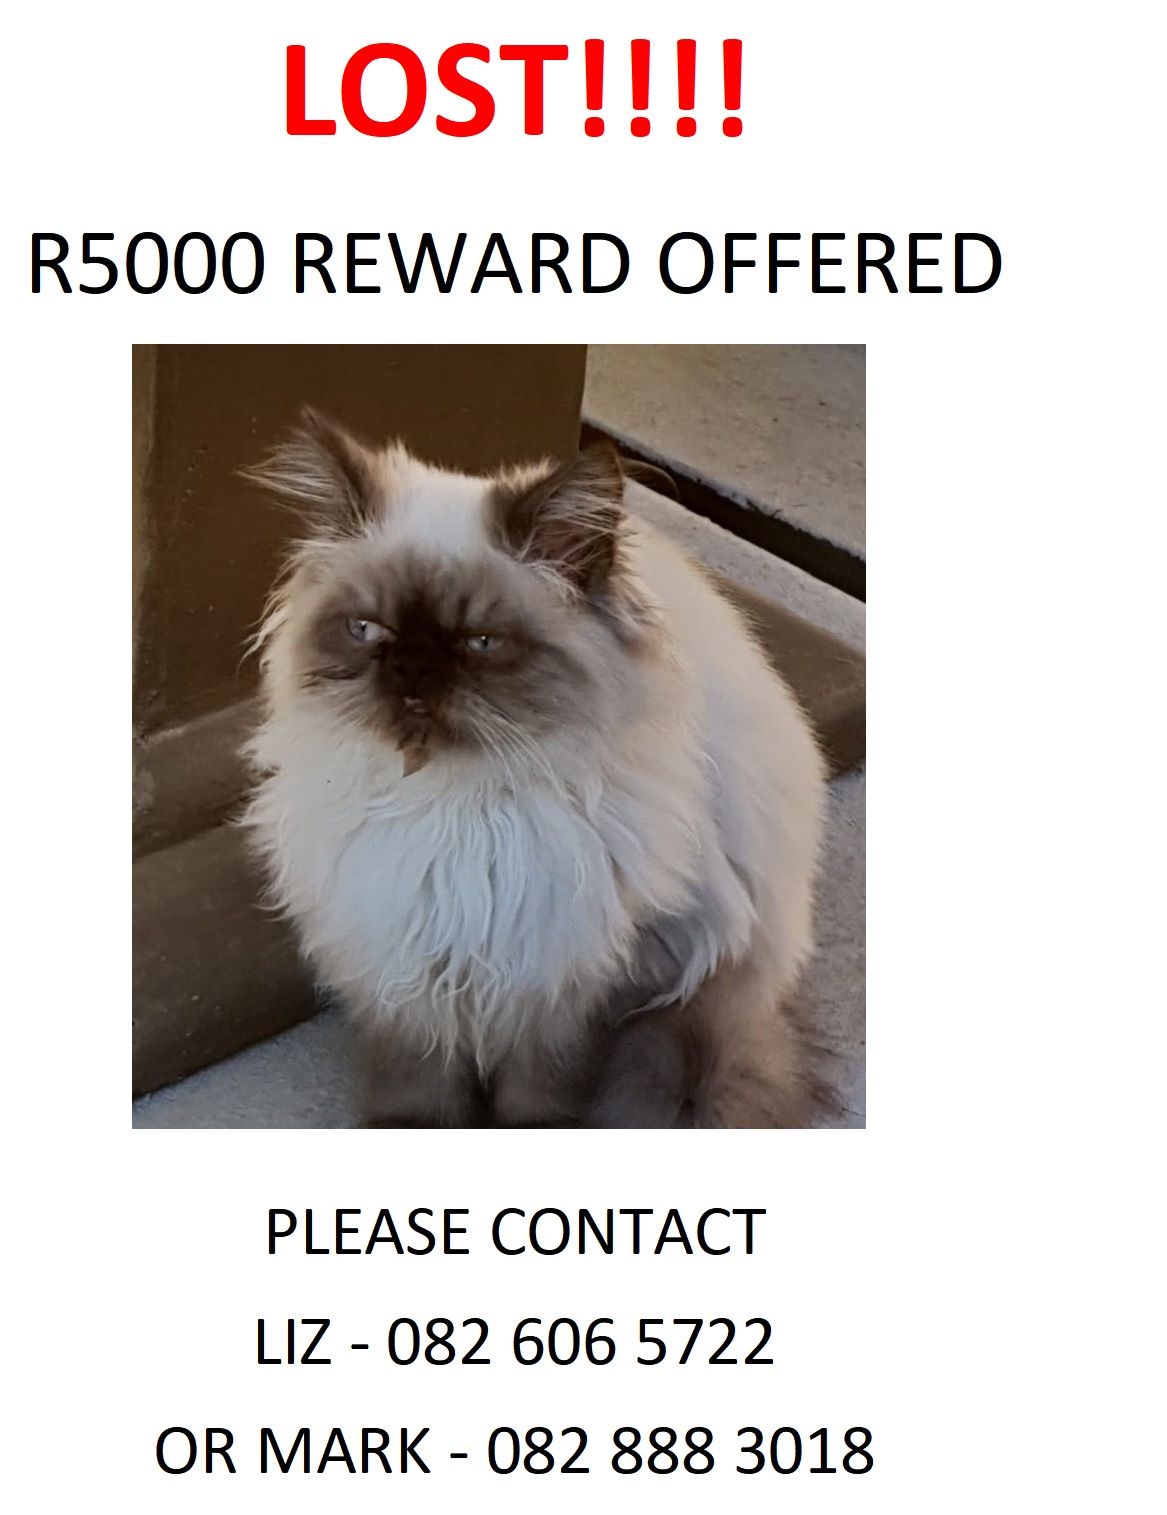 Lost, missing or stolen Persian Kitten